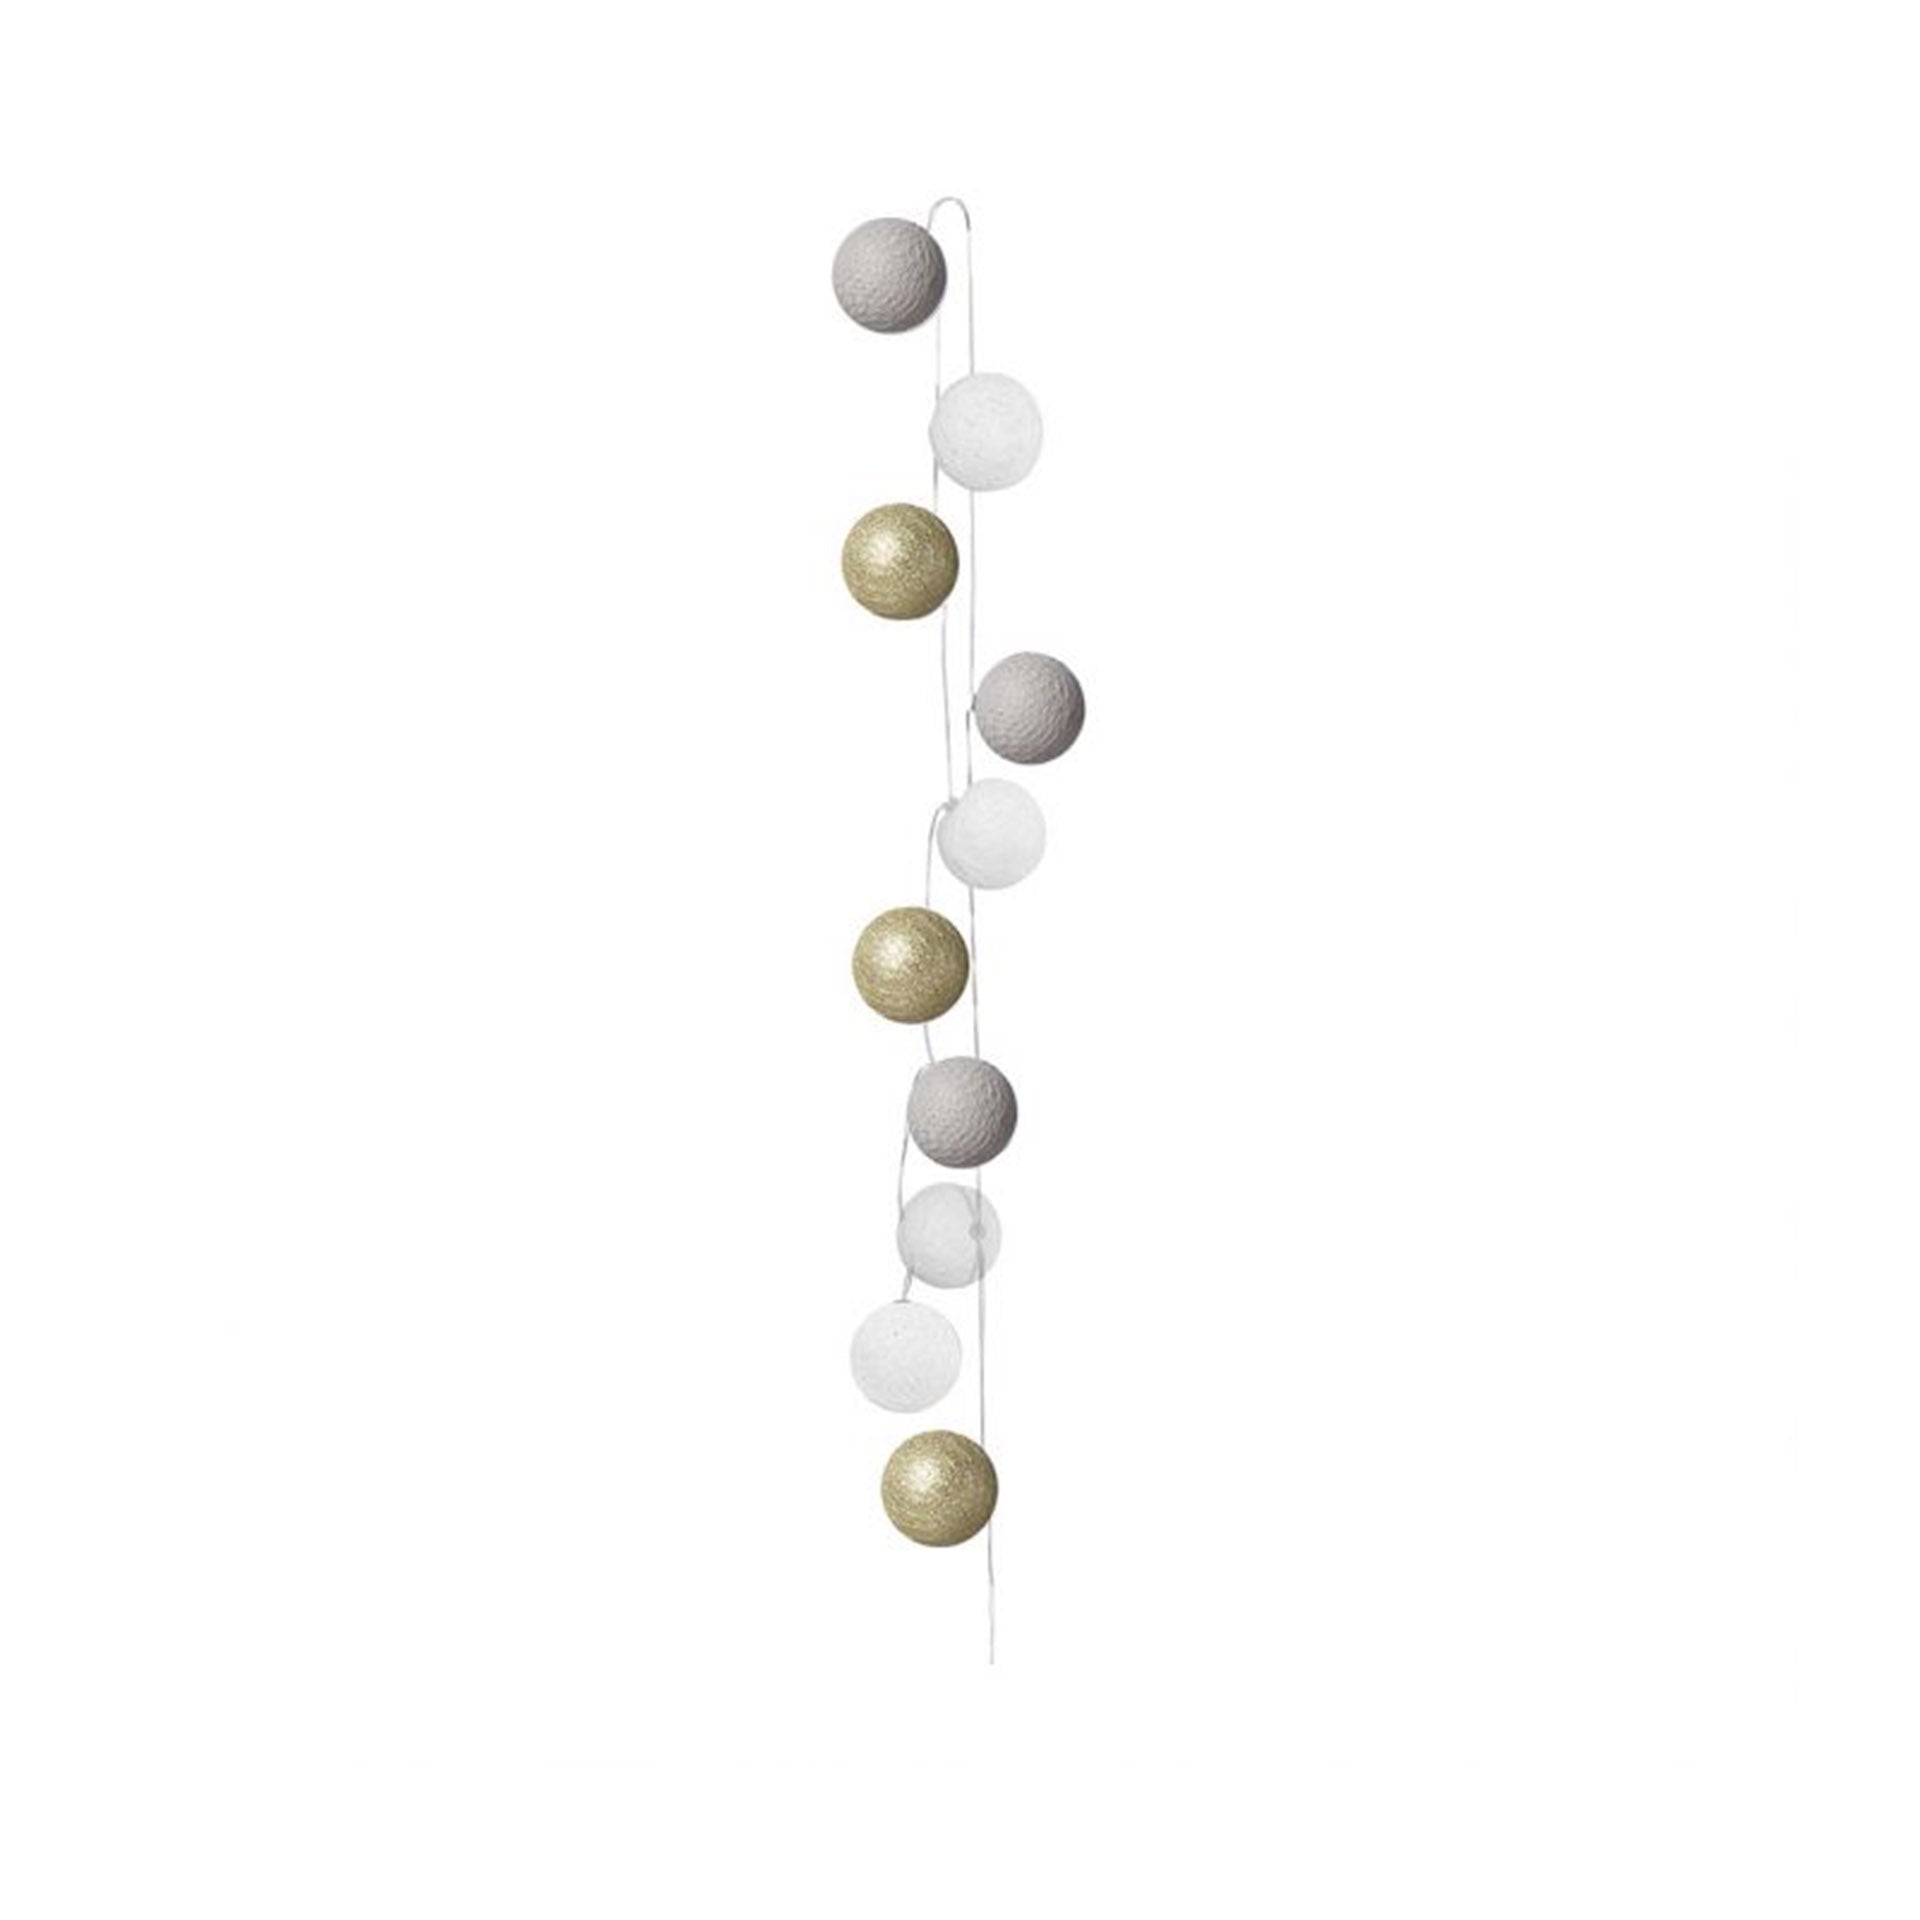 HKH Grinalda 10 Bolas LED Branco/Cinza/Dourado